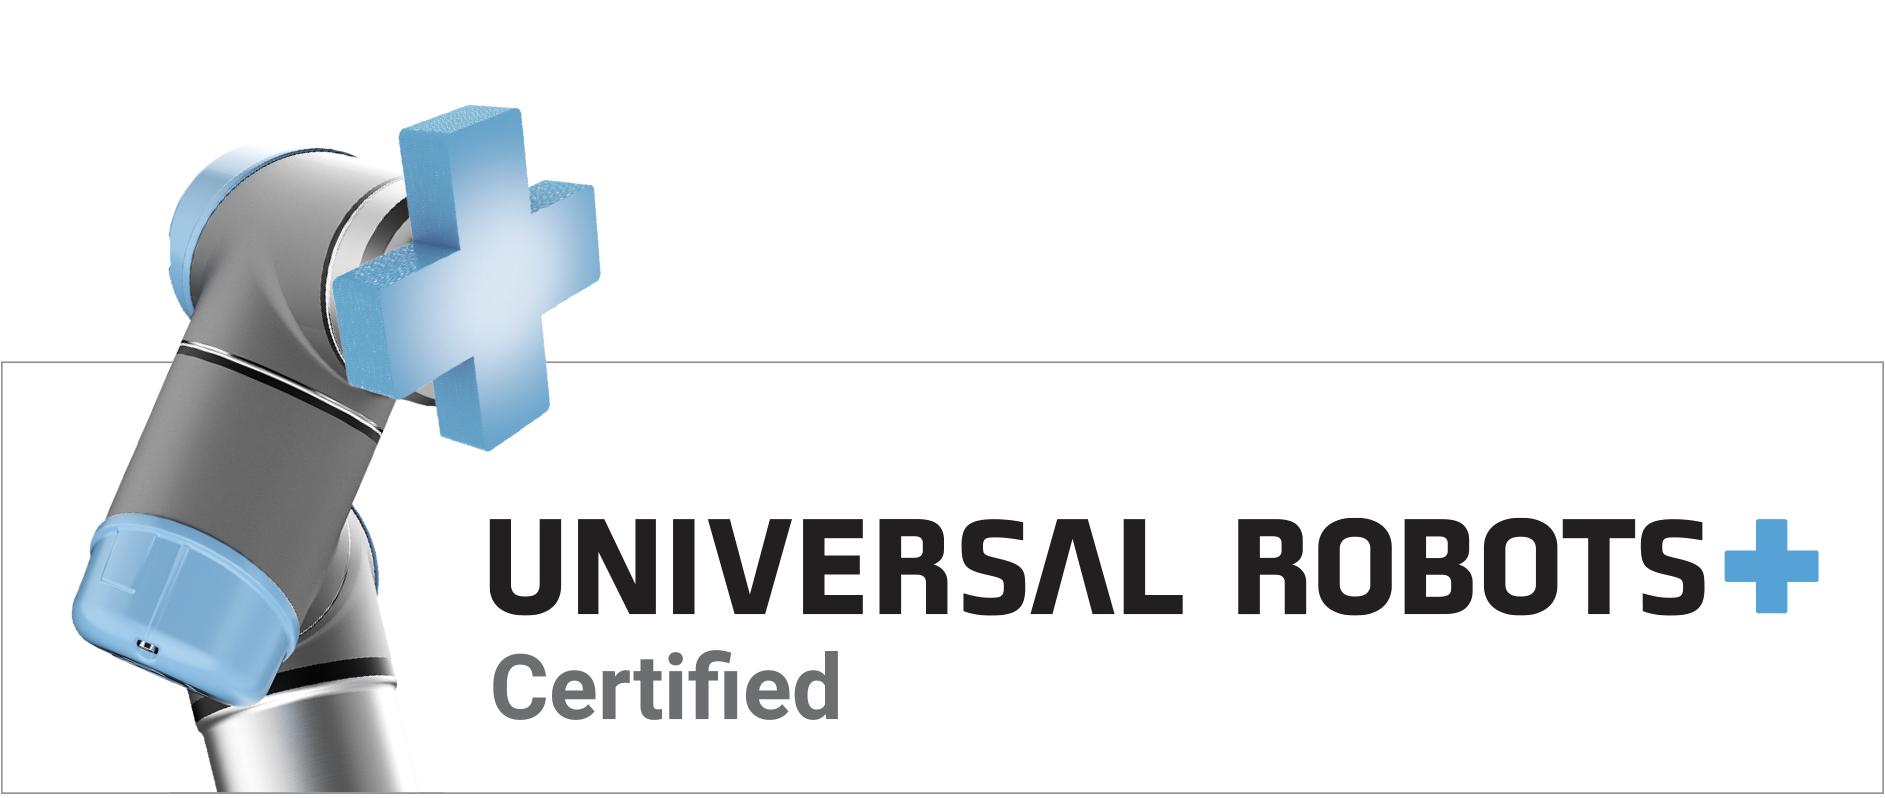 universal robots plus certified logo